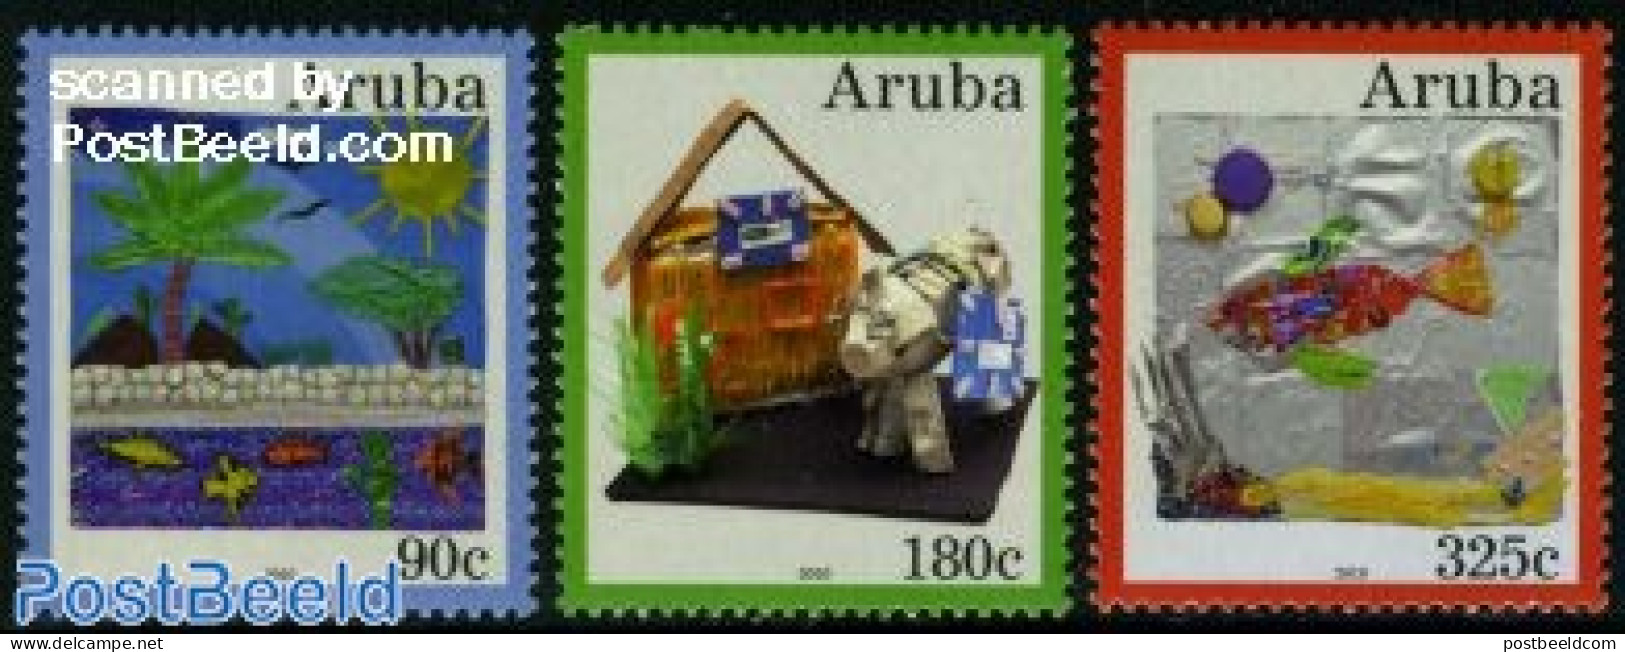 Aruba 2010 Recycling 3v, Mint NH, Nature - Environment - Environment & Climate Protection